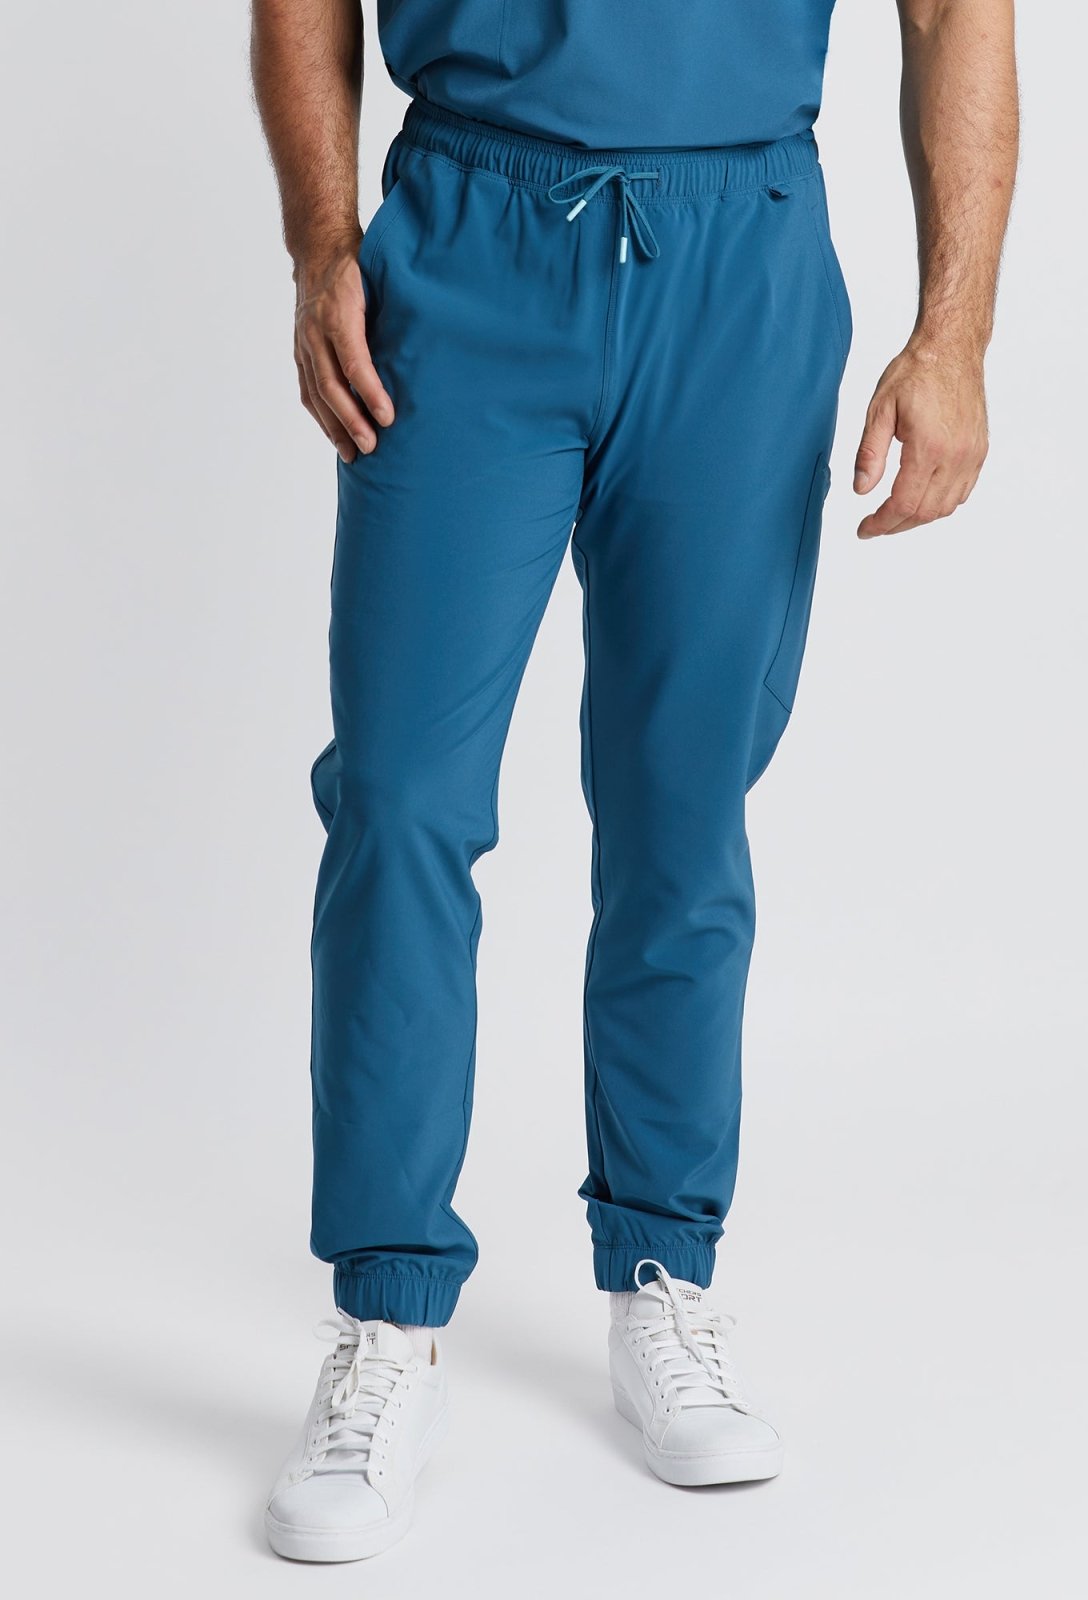 Navy Blue Daniel 2 Pocket Scrub Top – Noel Asmar Uniforms